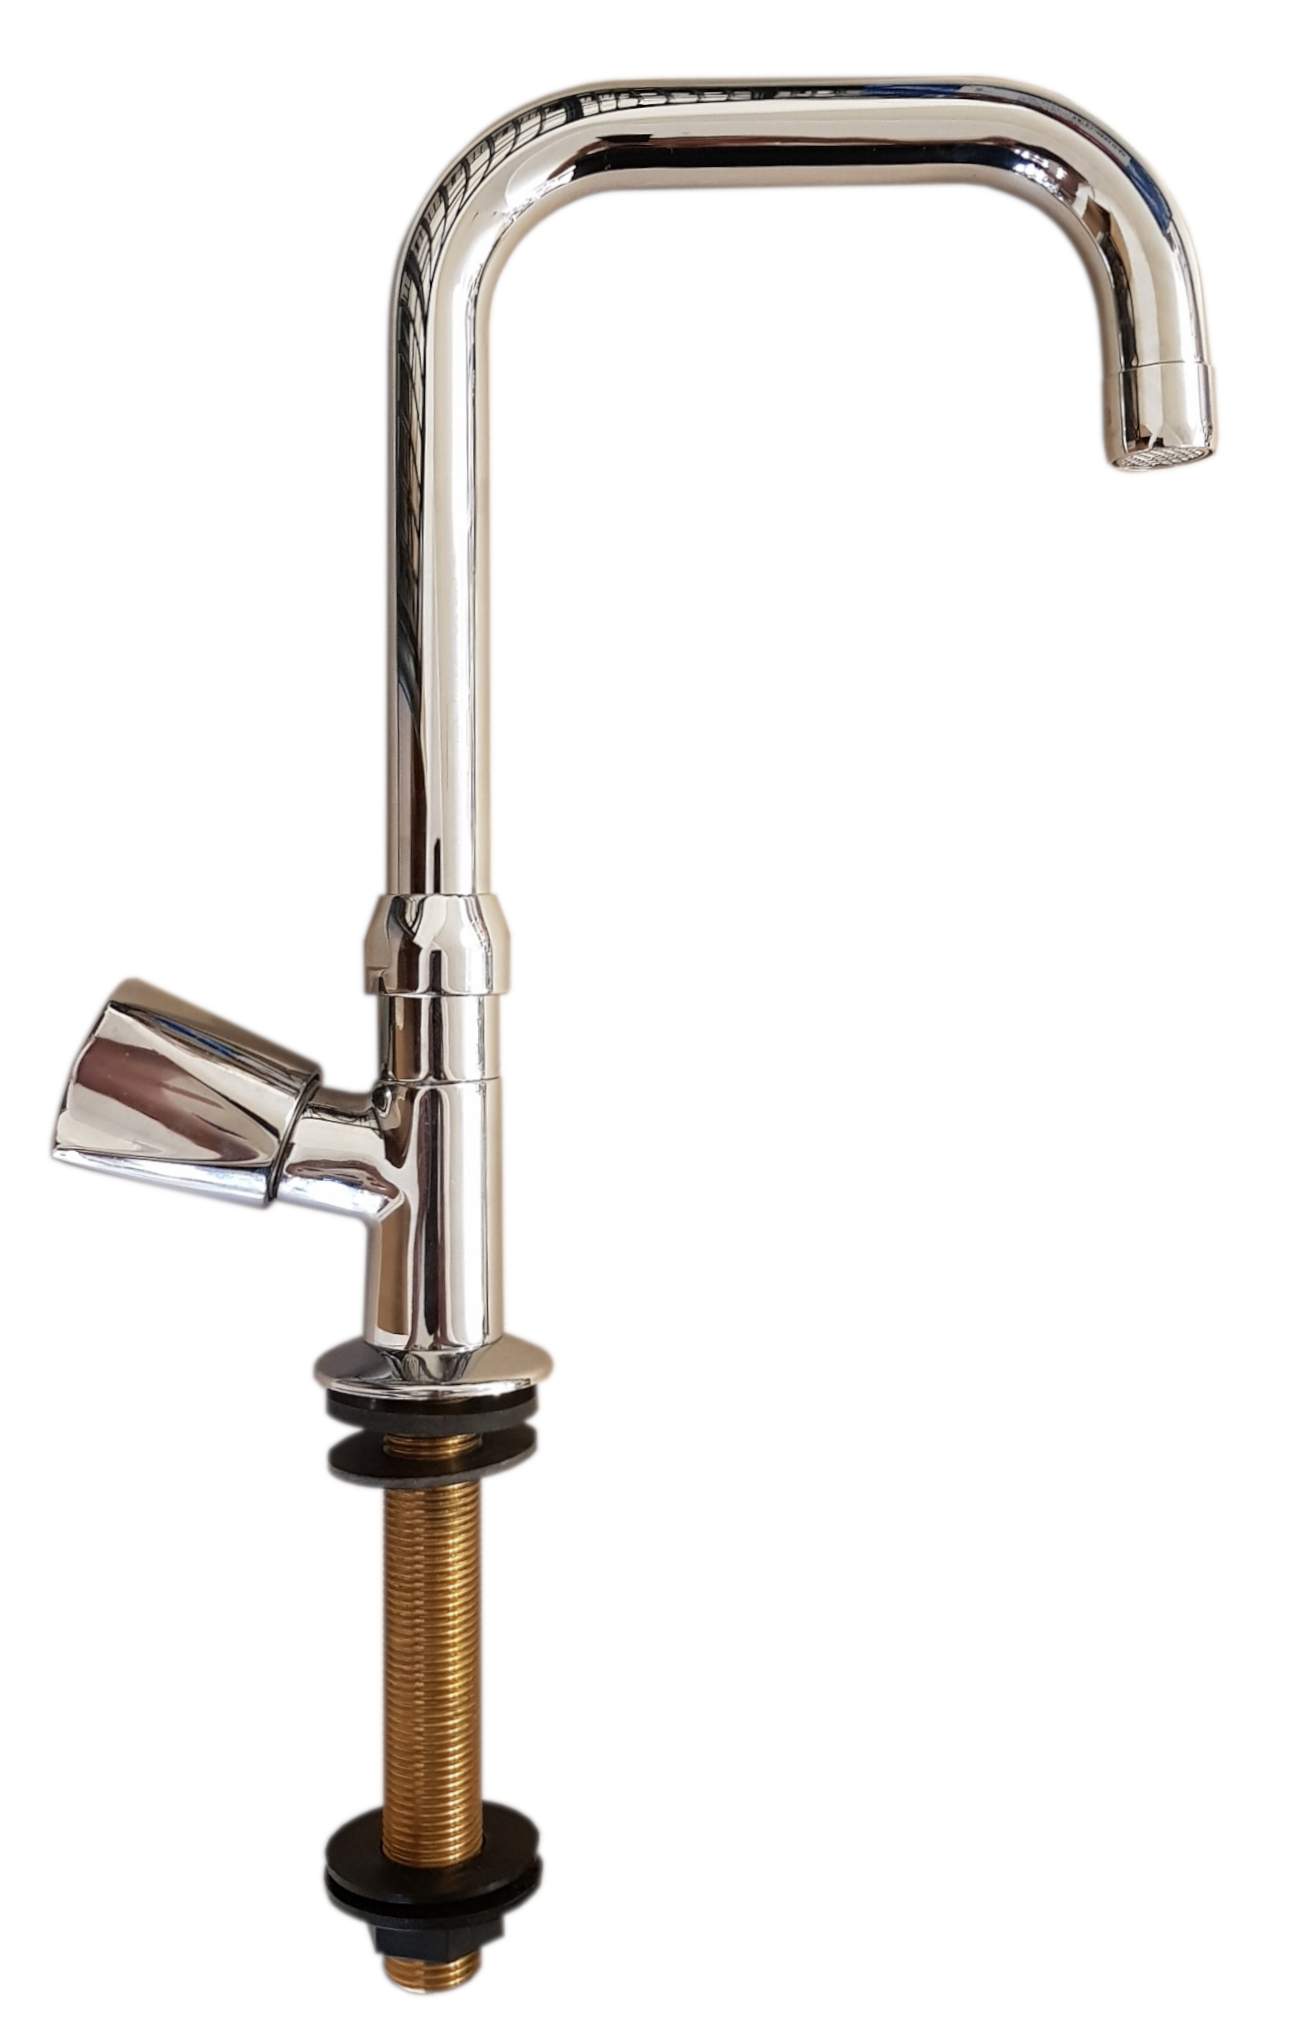 Pillar tap with 120mm stem